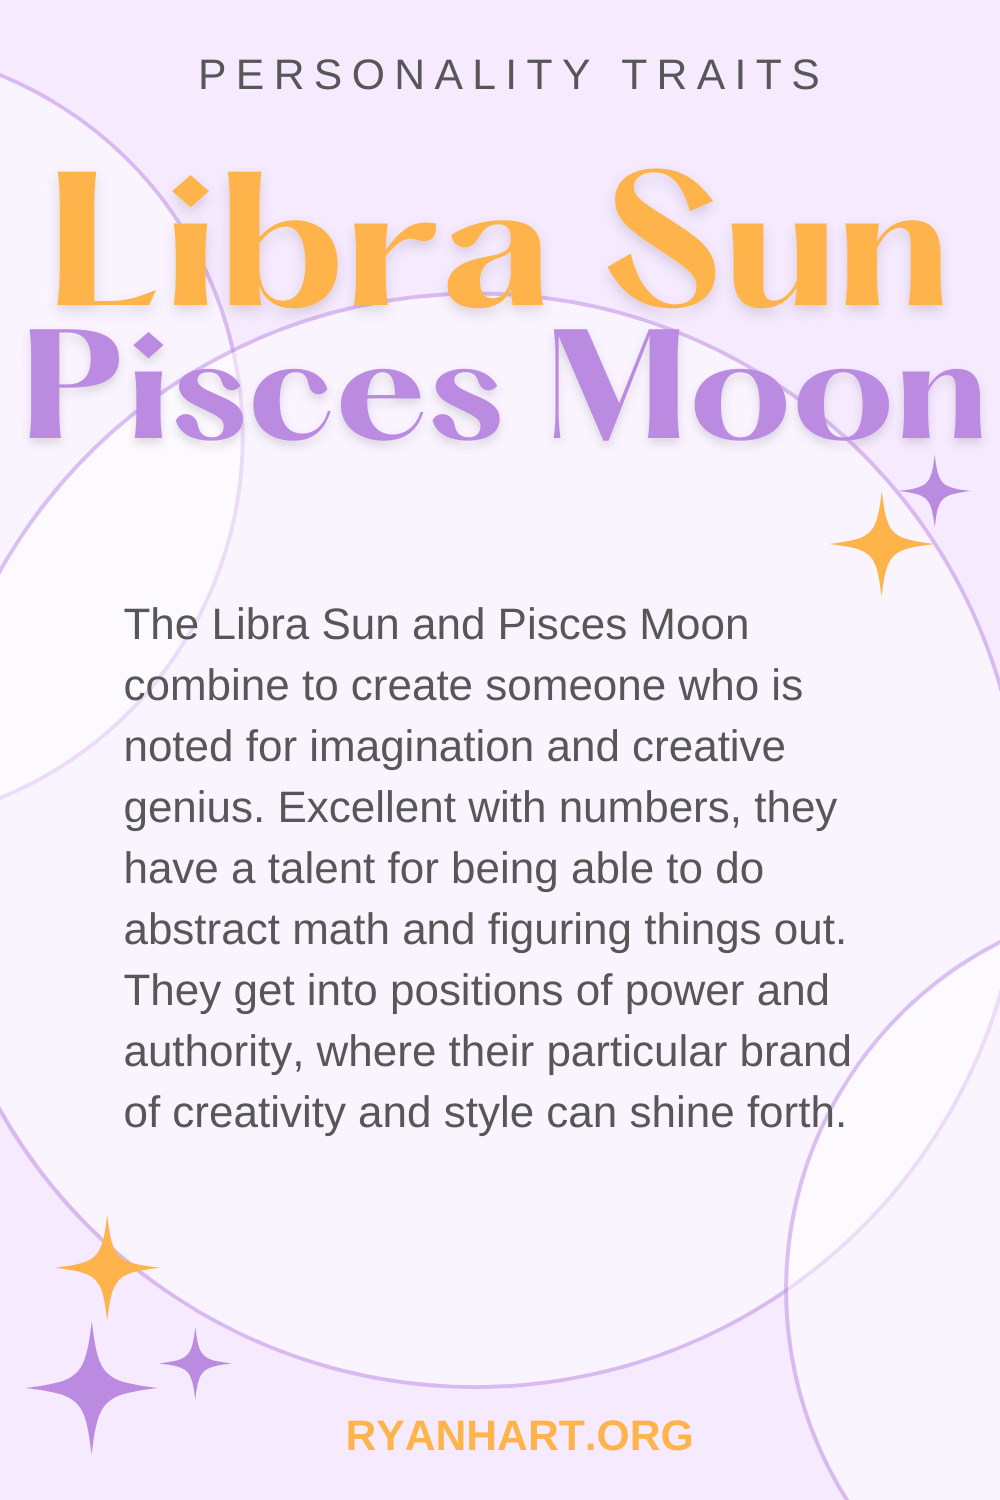  Ciri-ciri Kepribadian Libra Matahari Pisces Bulan